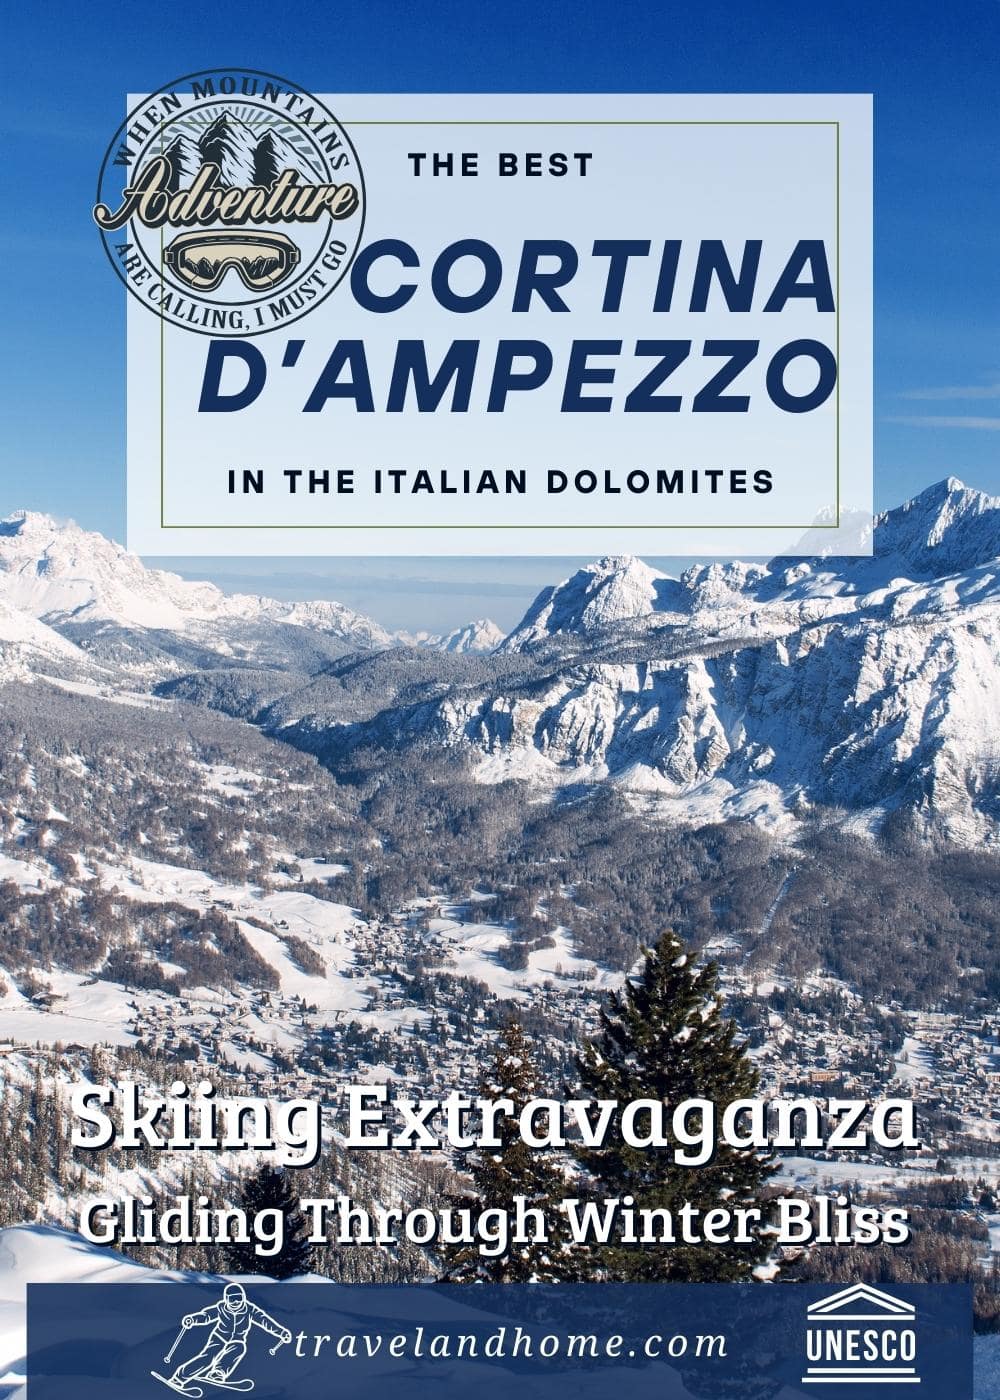 Cortina D'ampezzo snow ski guide, Italy, Dolomites, travel and home min